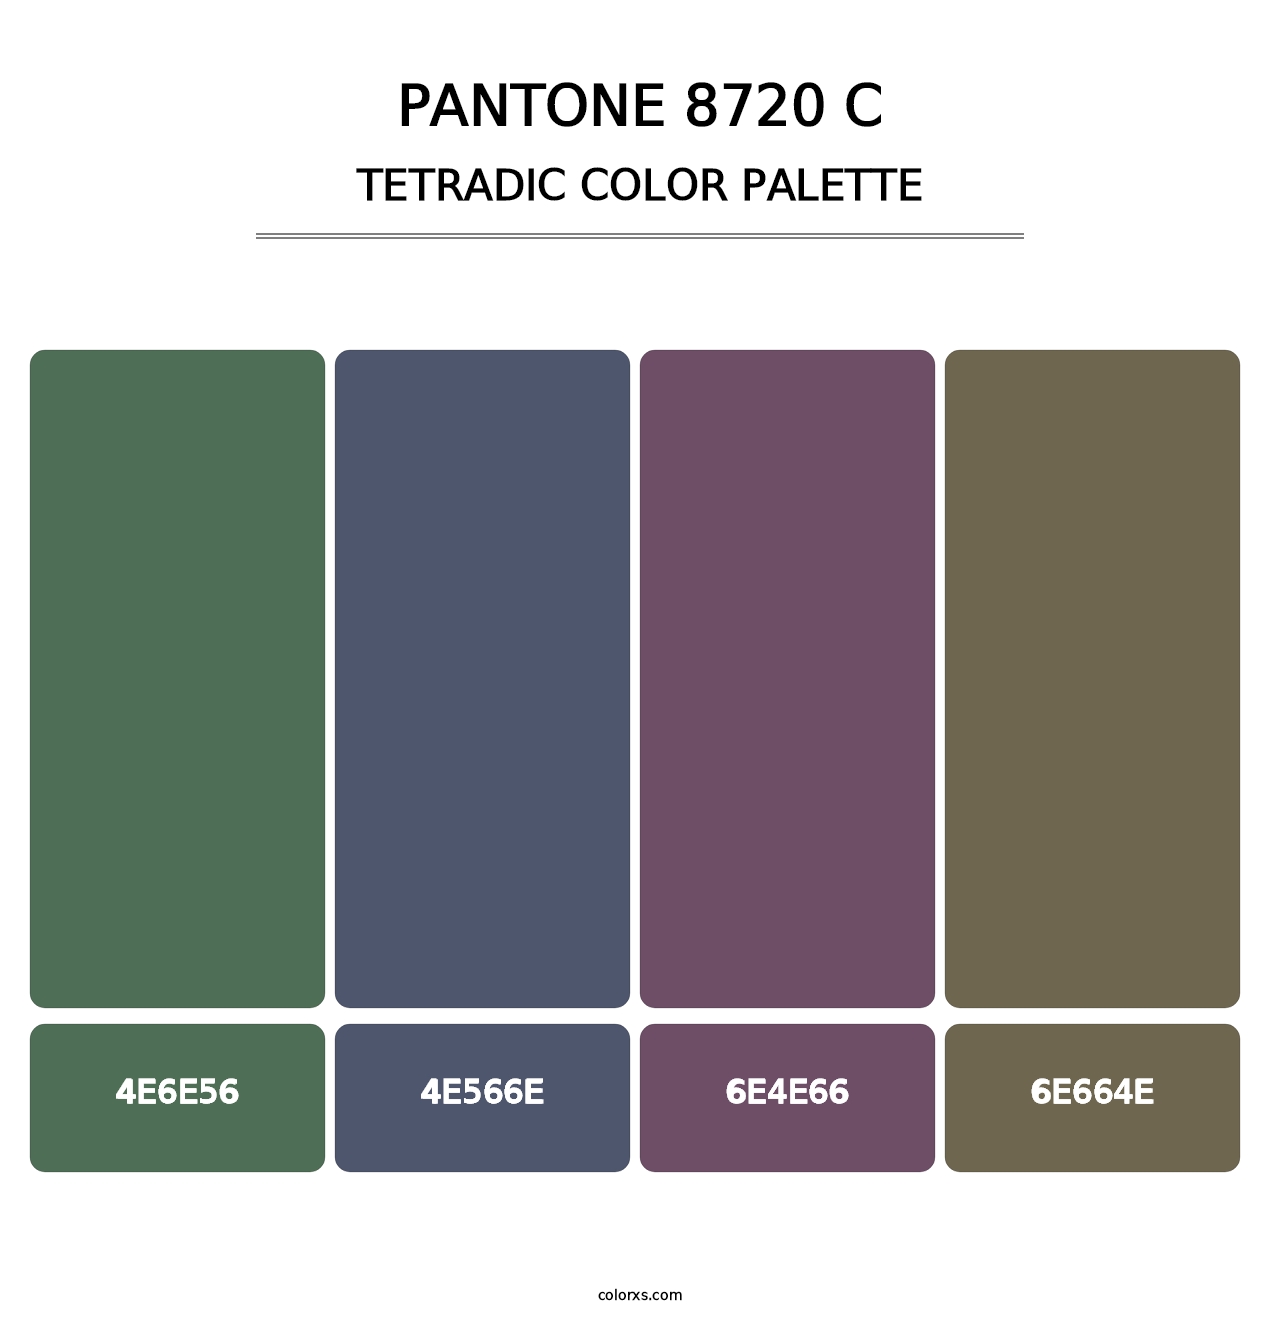 PANTONE 8720 C - Tetradic Color Palette